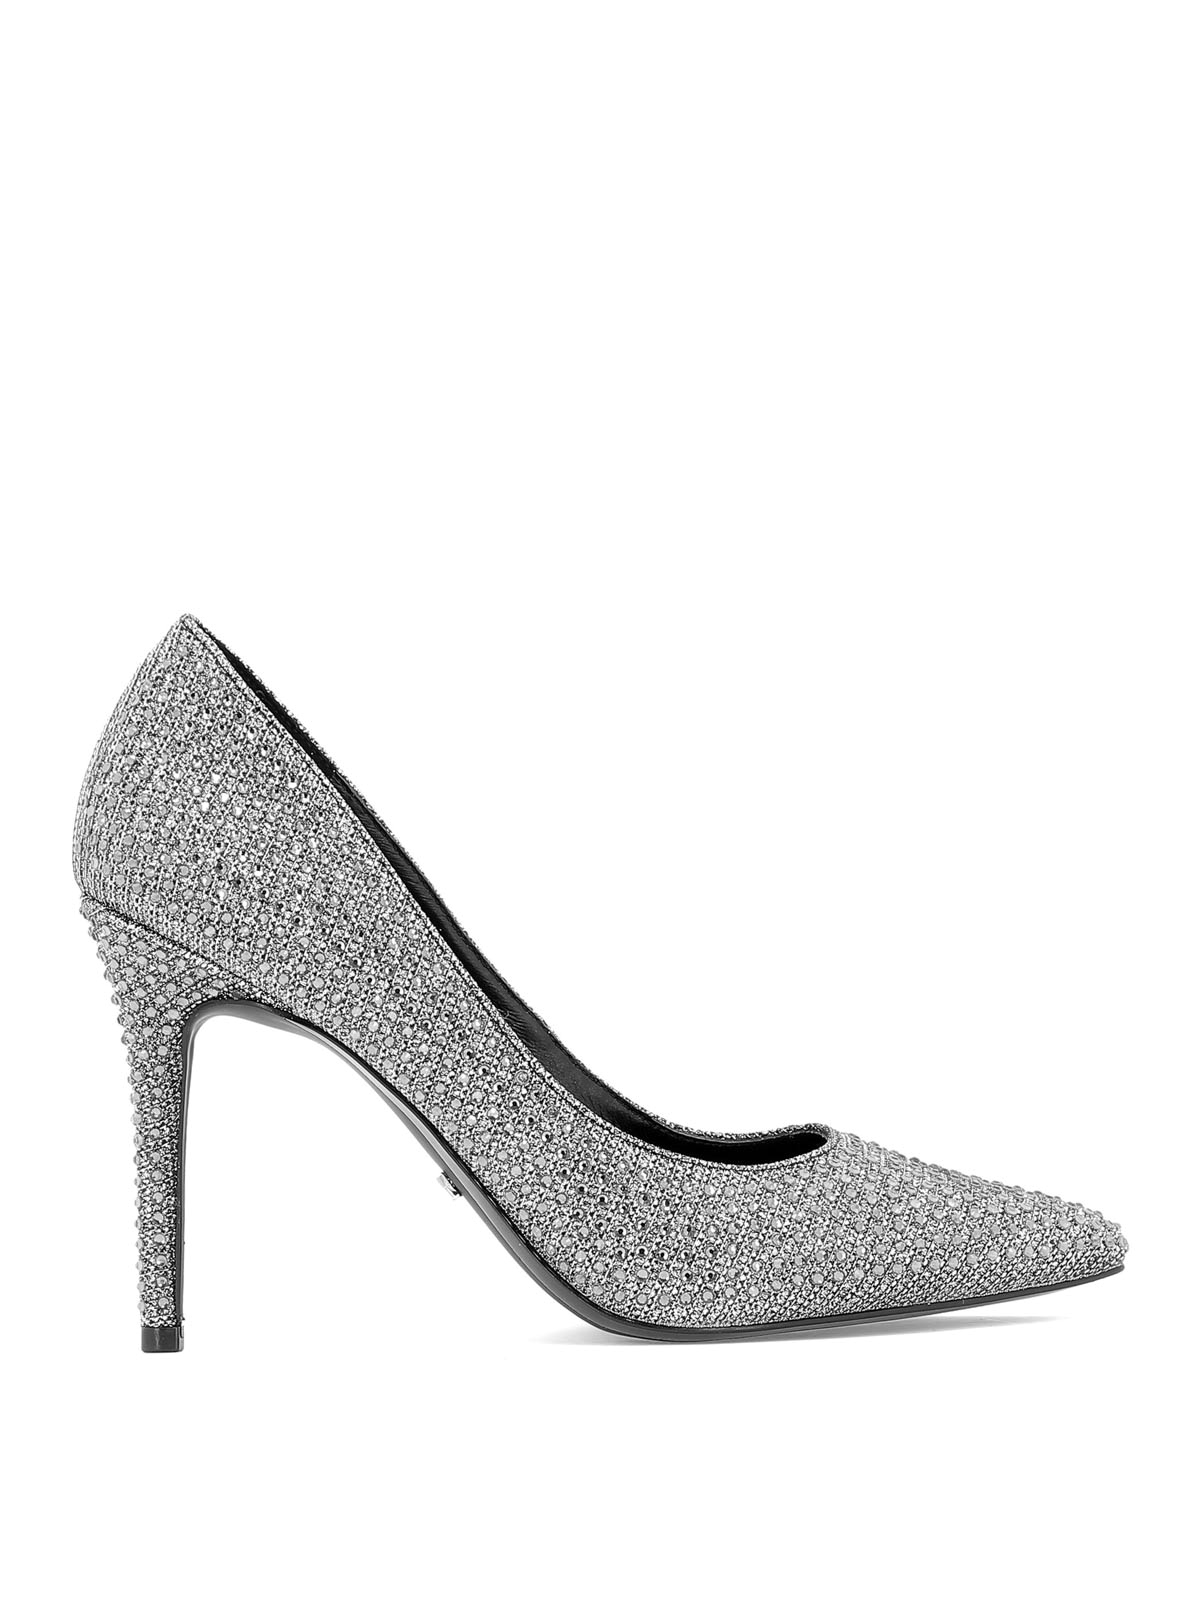 michael kors black sparkly heels